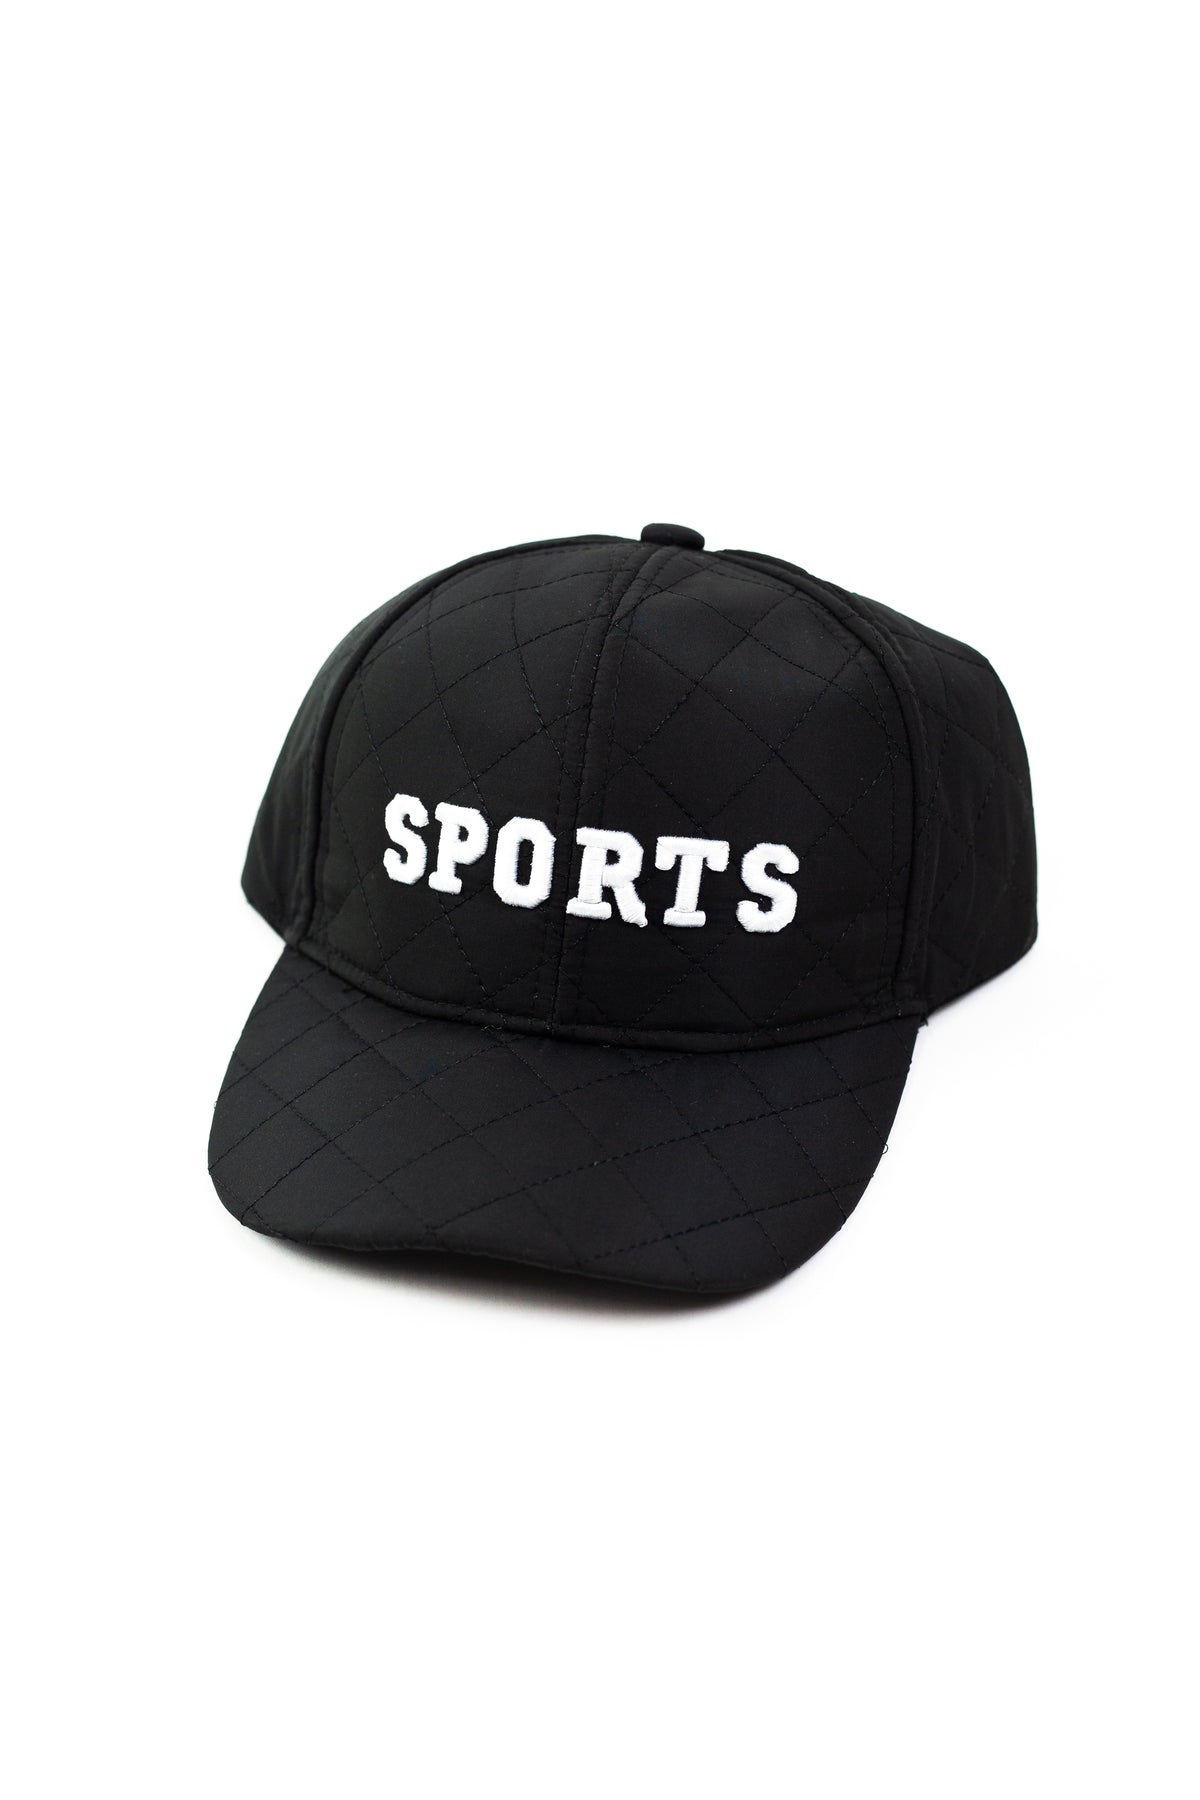 Sports Ball Cap